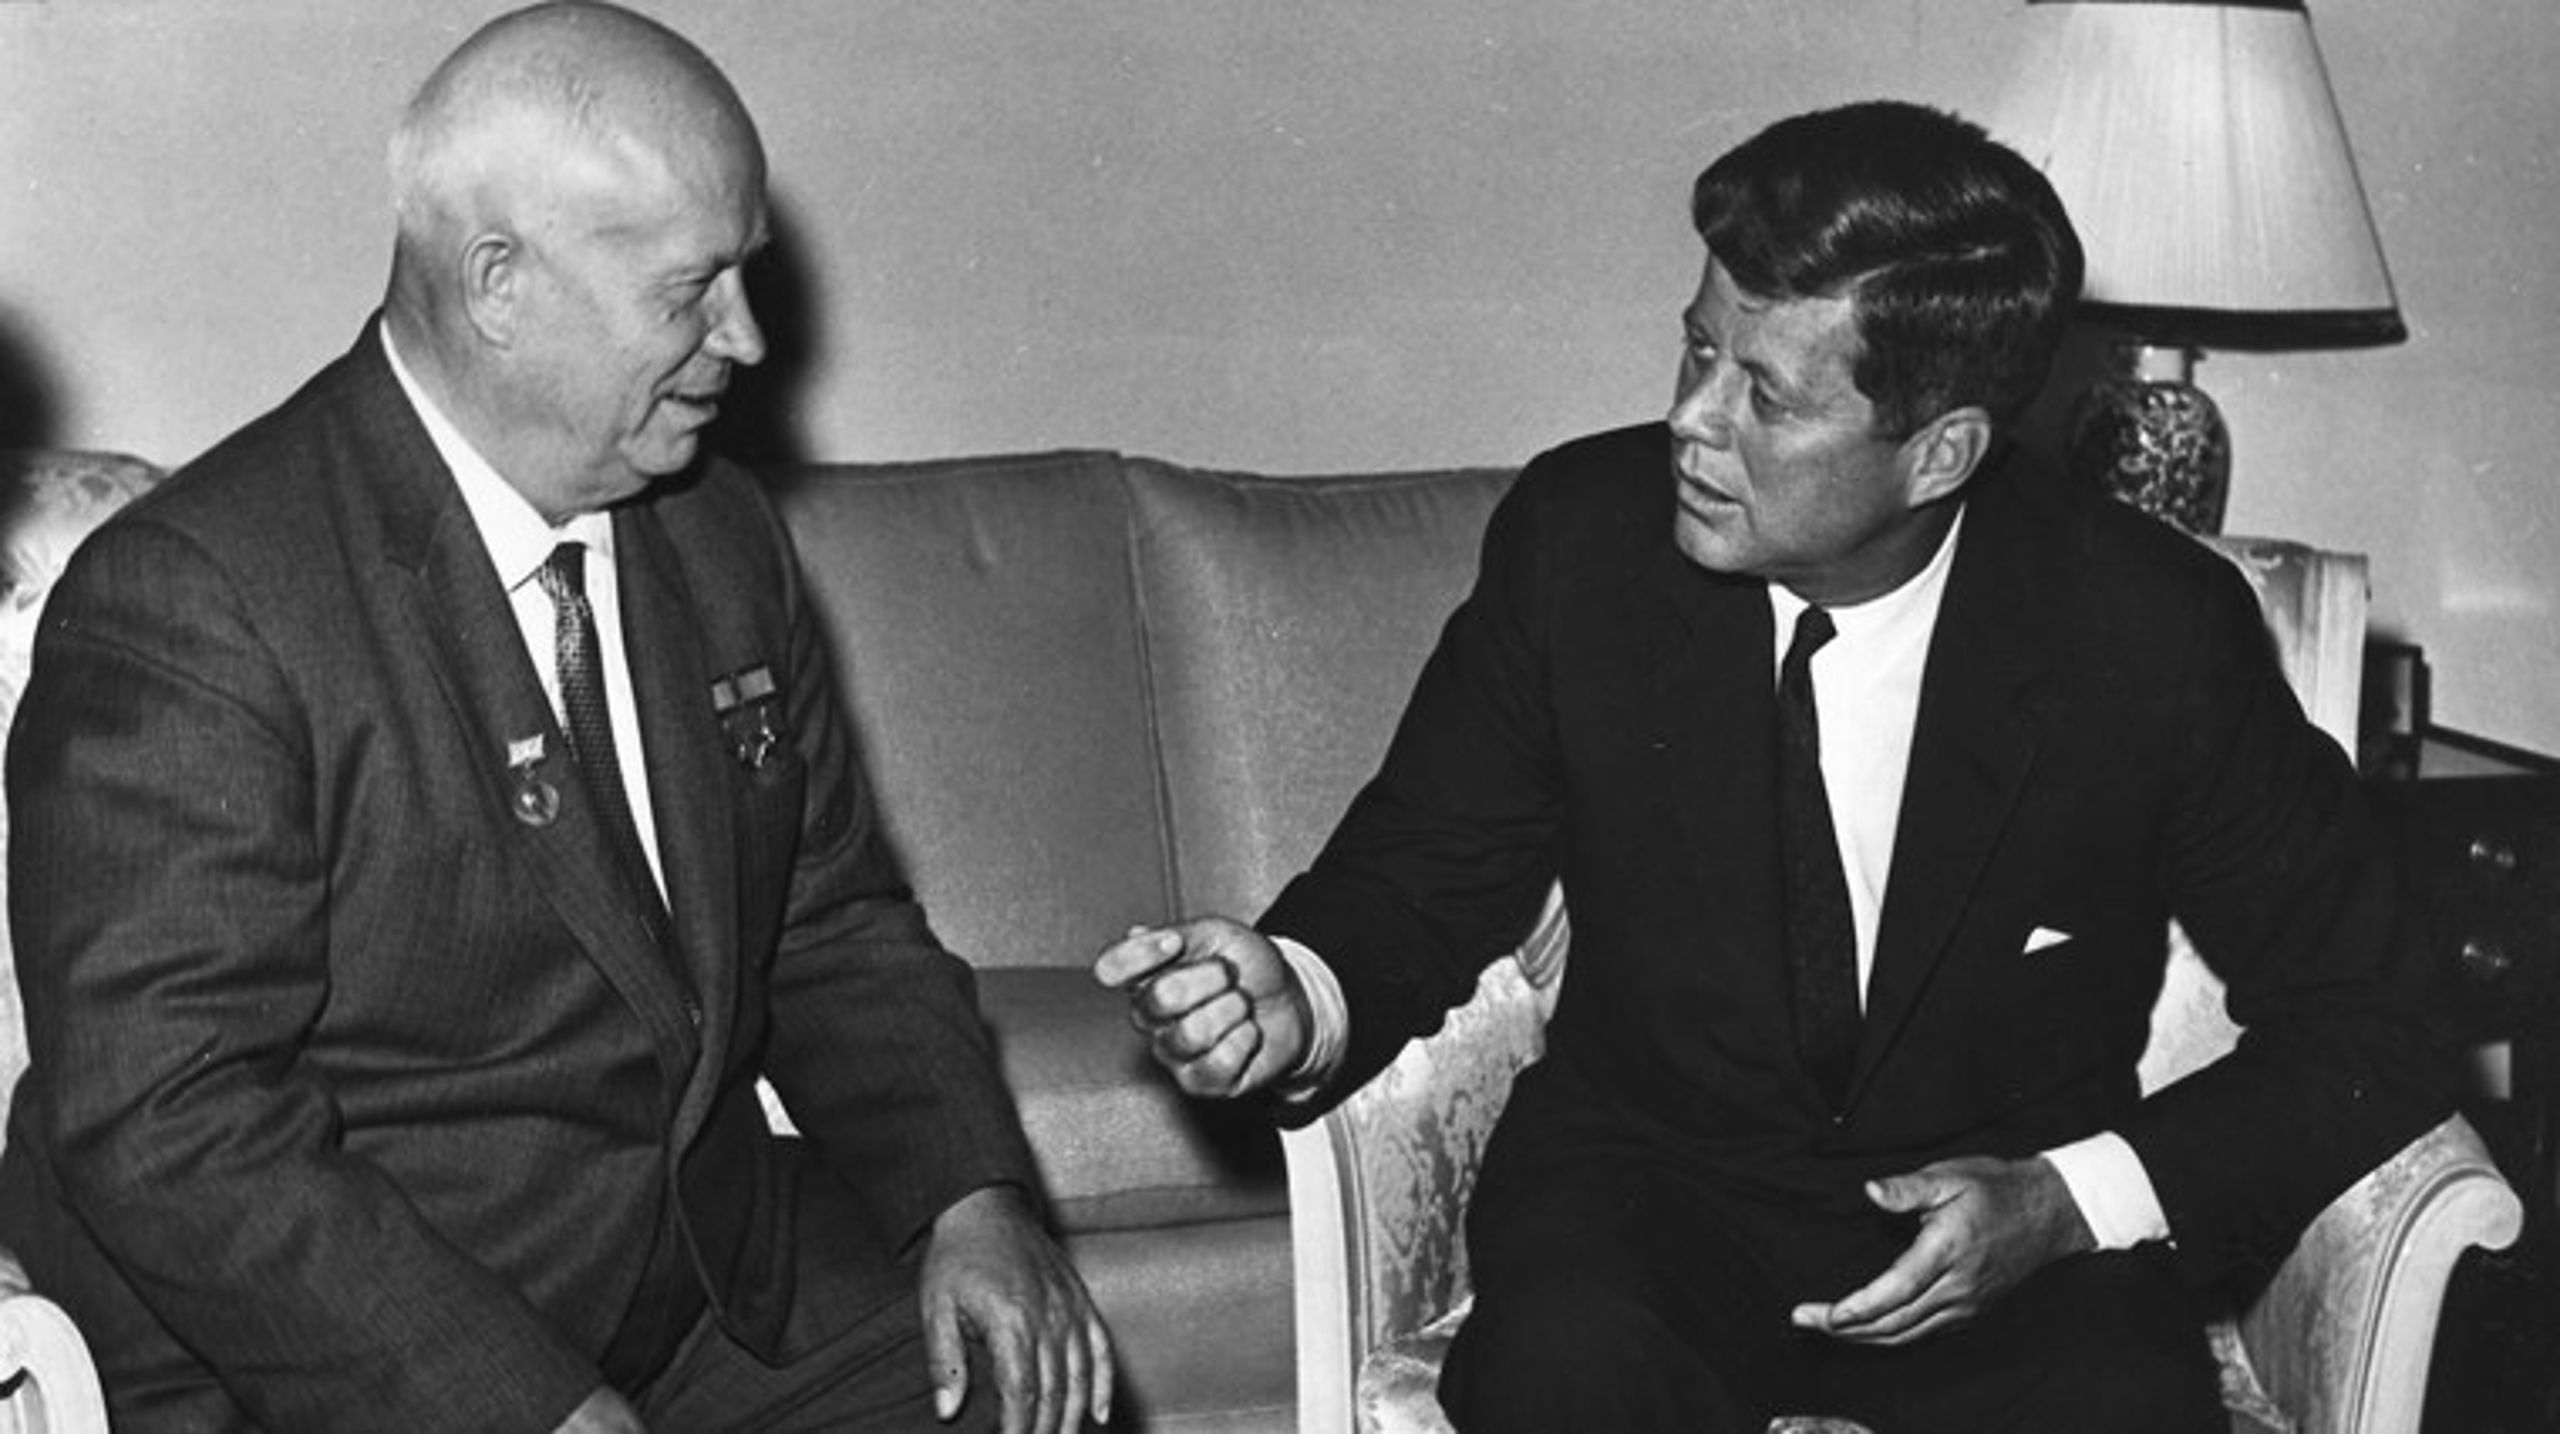 Det daværende Sovjetunionens generalsekretær Nikita Khrusjtjov (t.v.) og USA's daværende præsident John F. Kennedy (t.h.) til topmøde i Wien i juni 1961.